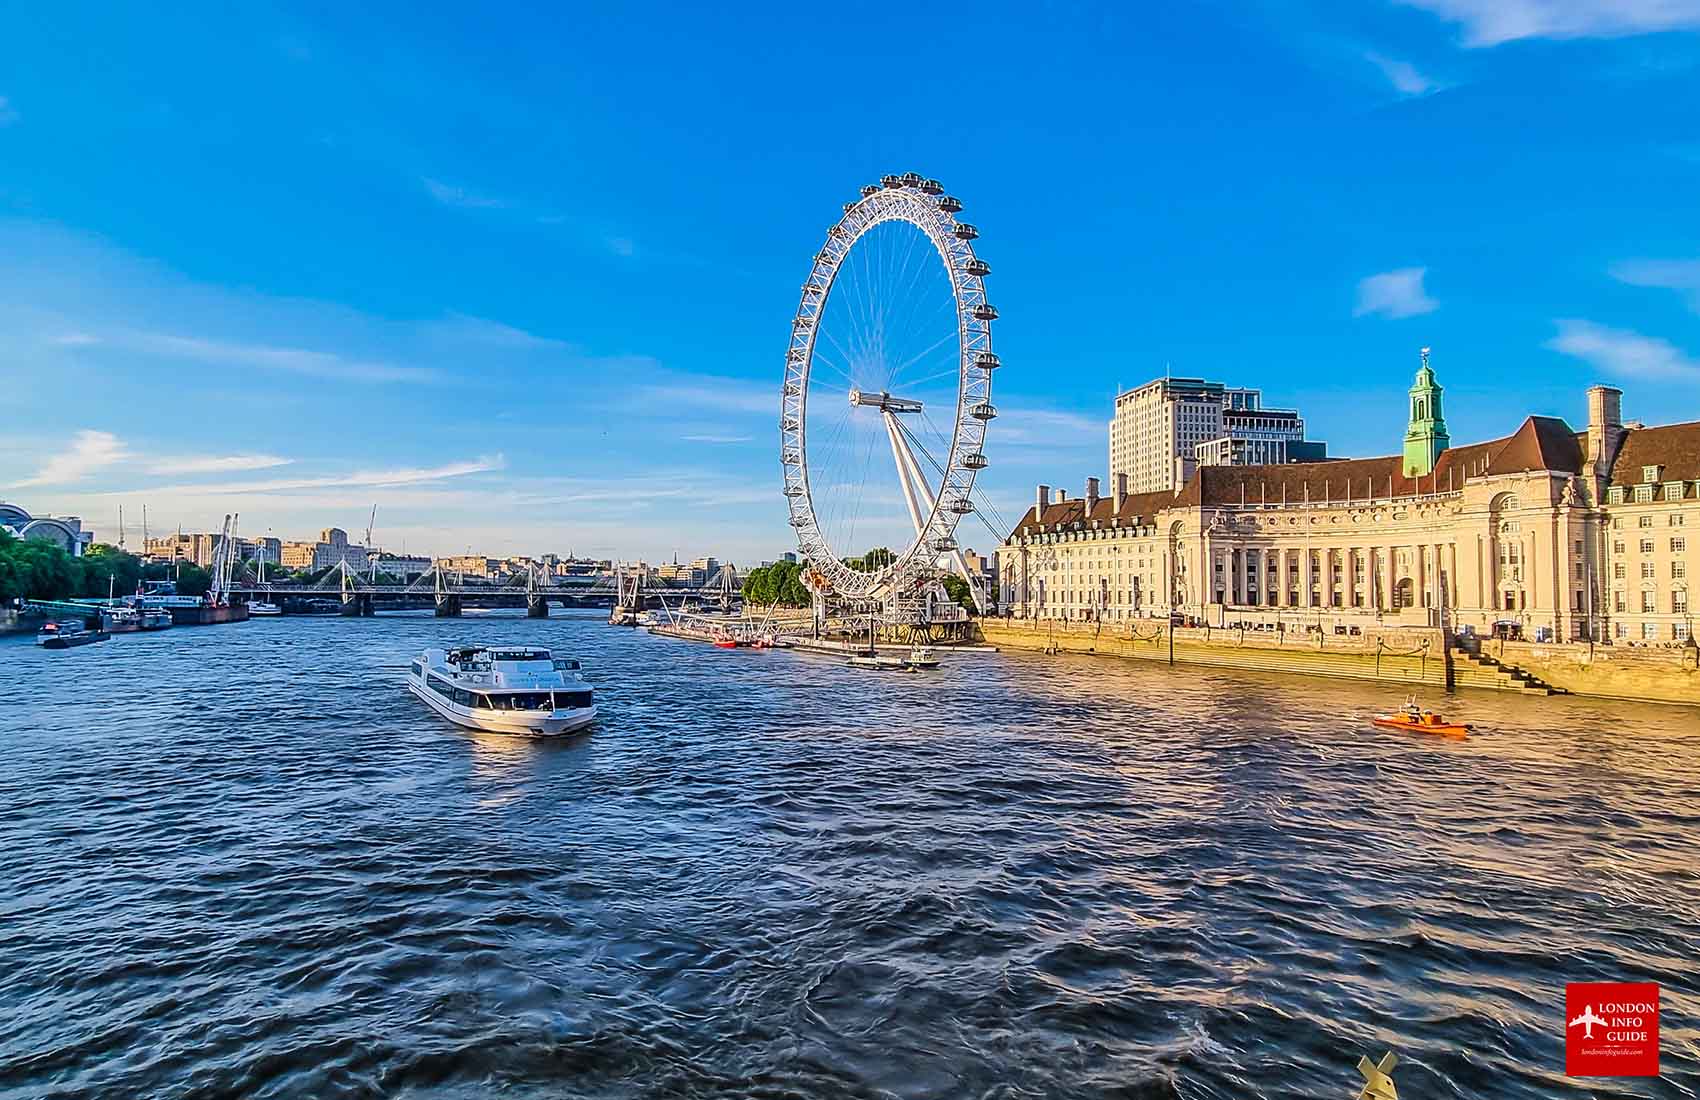 The London Eye Wheel.